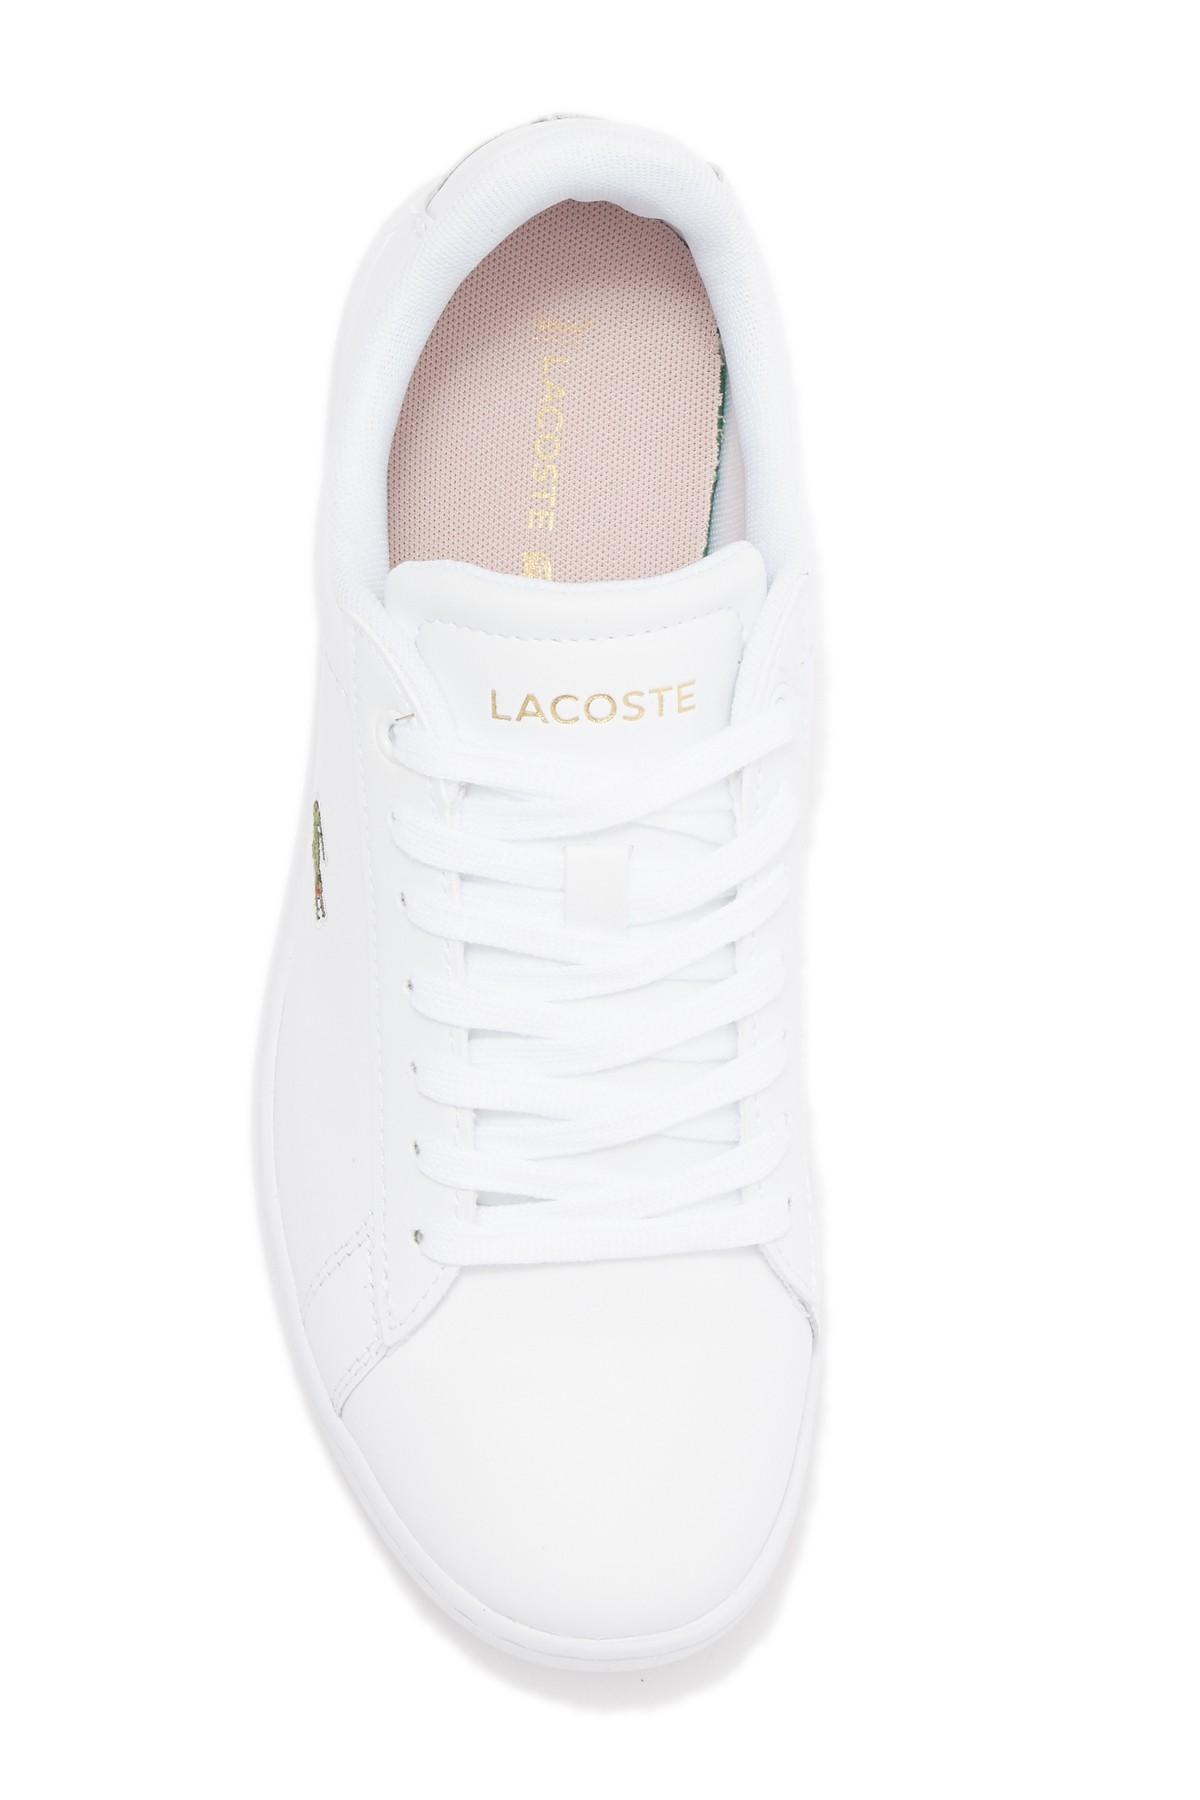 Lacoste Womens Hydez 119 2 P Fashion Sneaker 